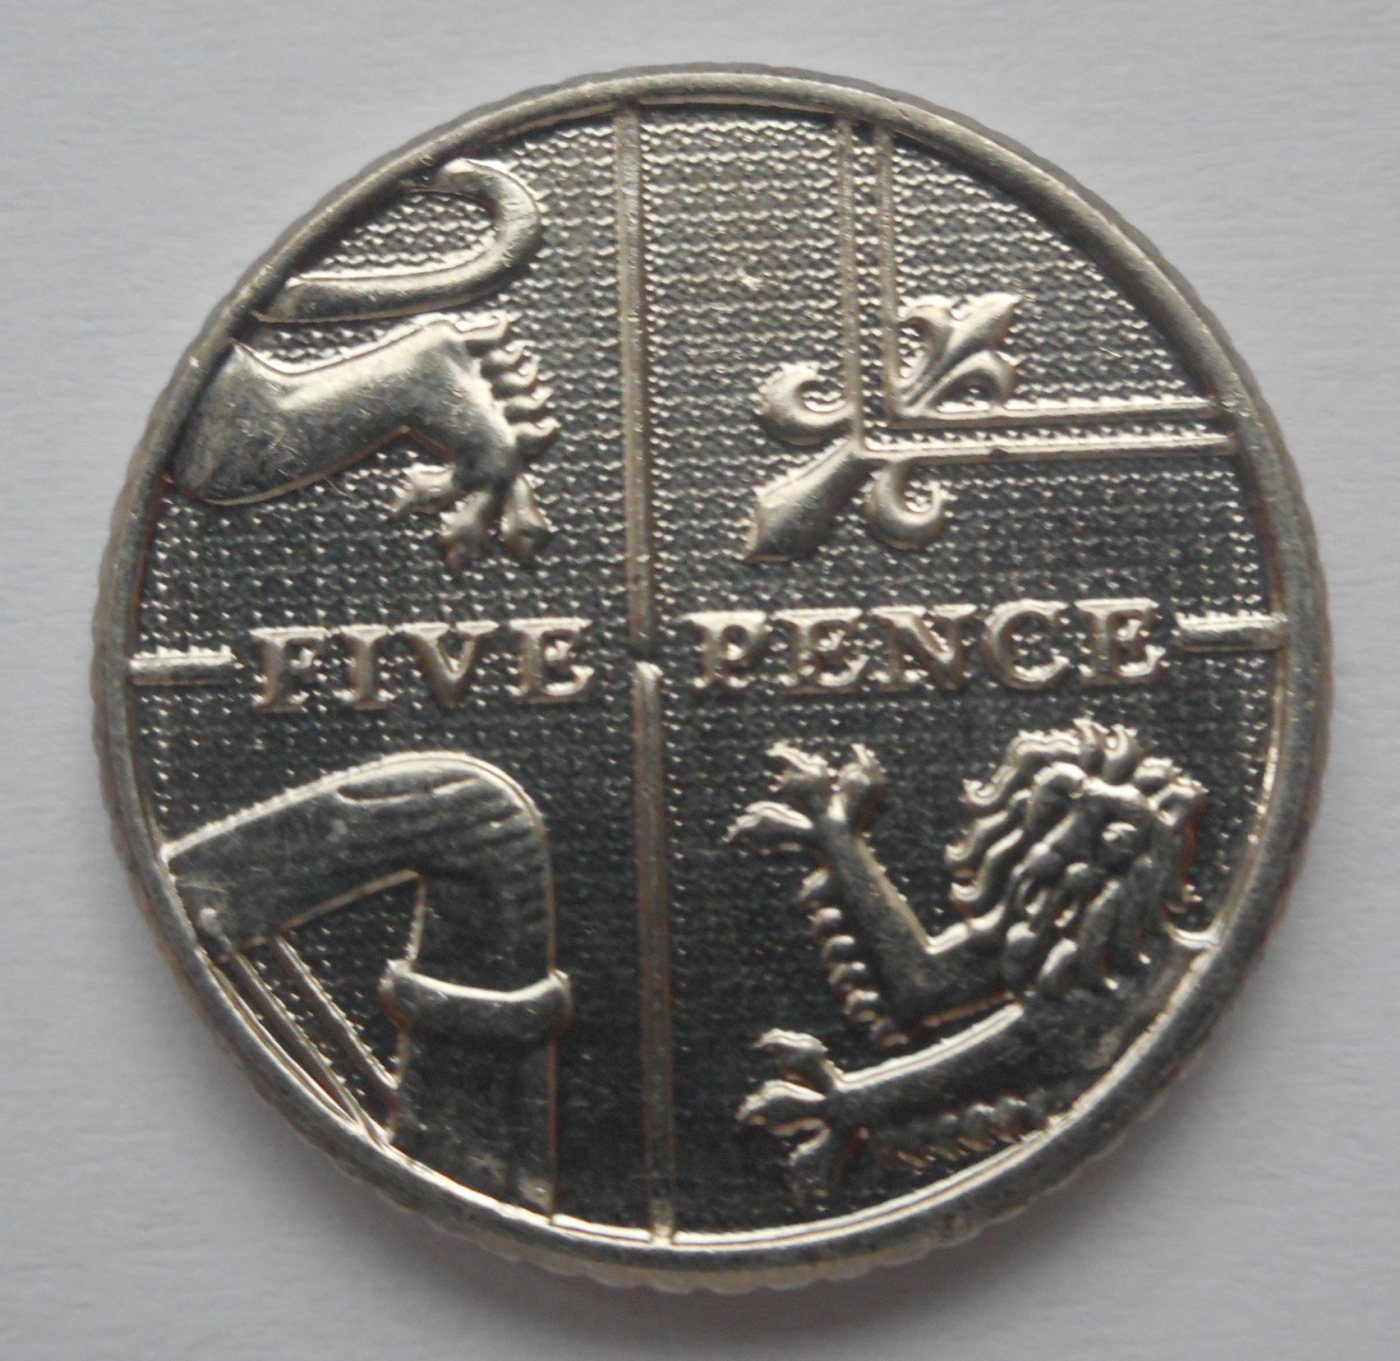 5 Pence 2015, Elizabeth II (1952-present) - Great Britain - Coin - 36986